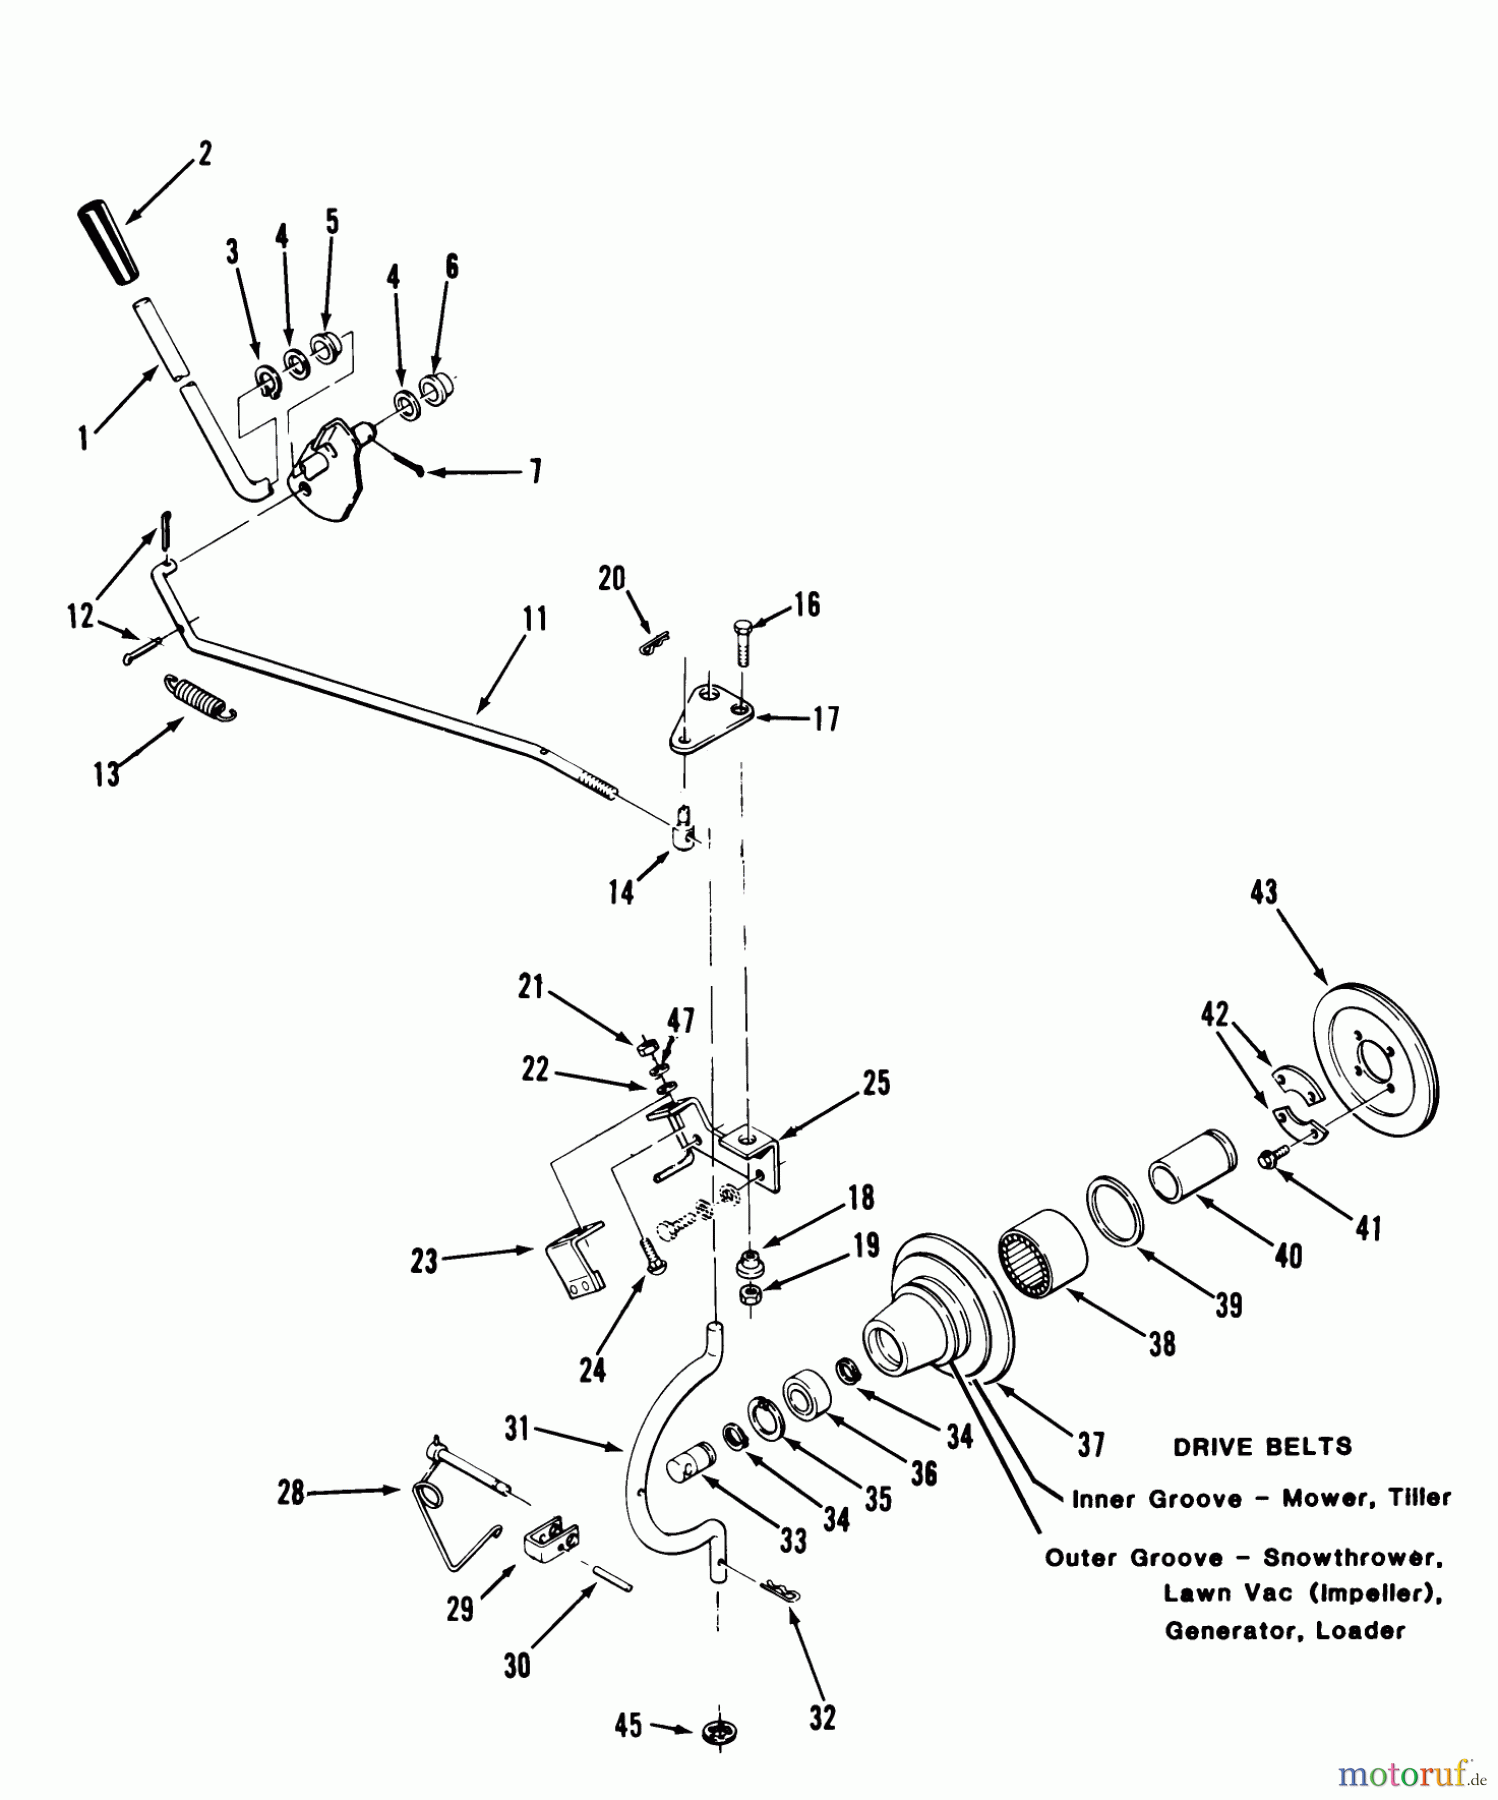  Toro Neu Mowers, Lawn & Garden Tractor Seite 2 C1-20OE01 (520-HC) - Toro 520-HC Garden Tractor, 1988 PTO CLUTCH AND CONTROL